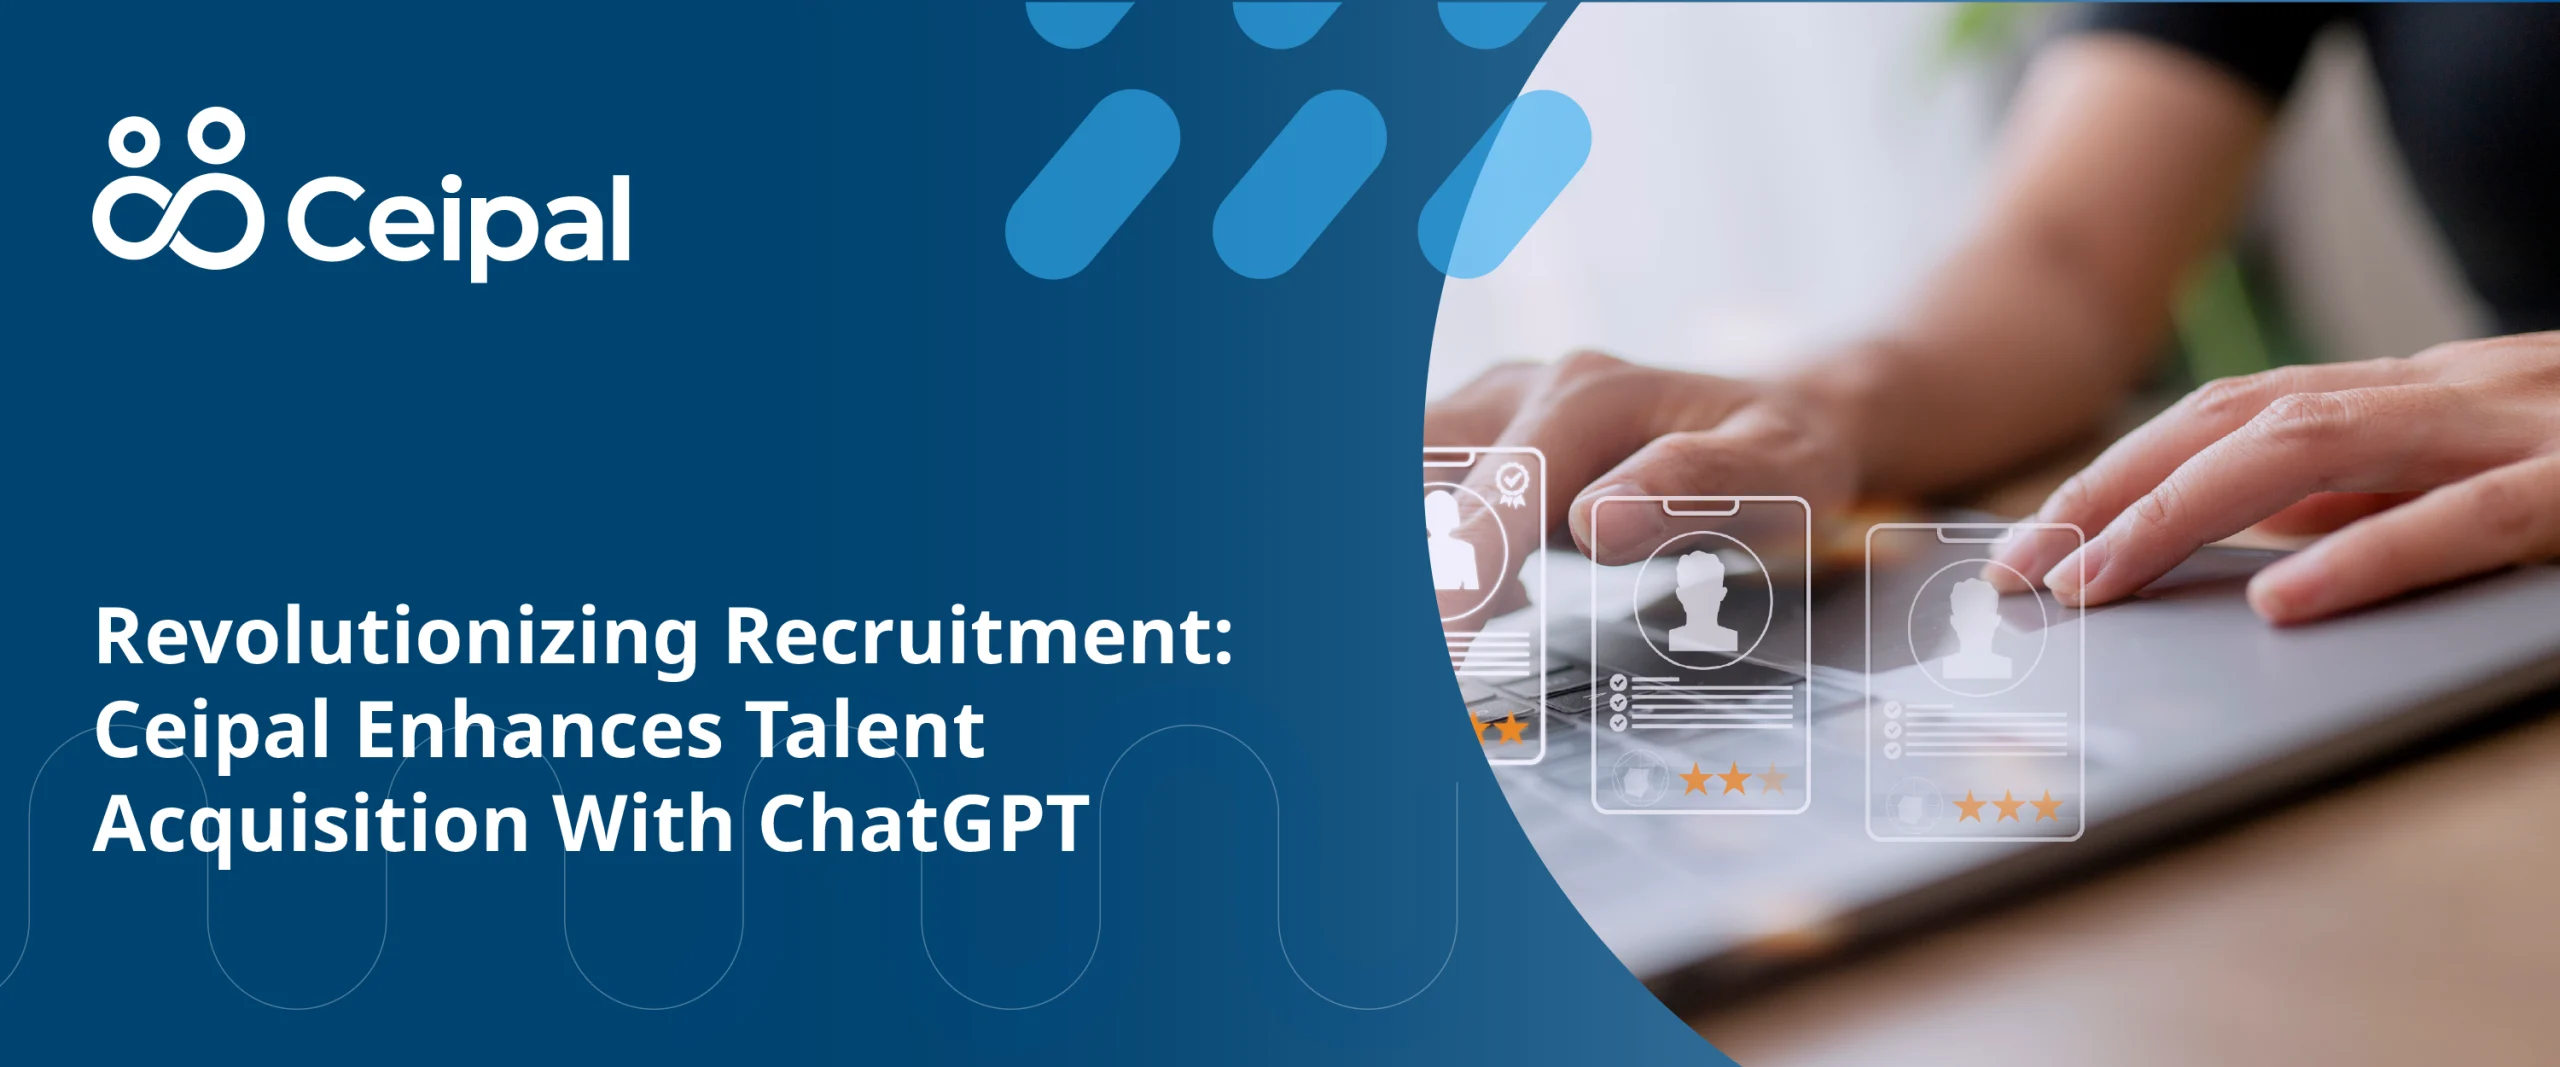 Revolutionizing Recruitment: Ceipal Enhances Talent Acquisition With ChatGPT